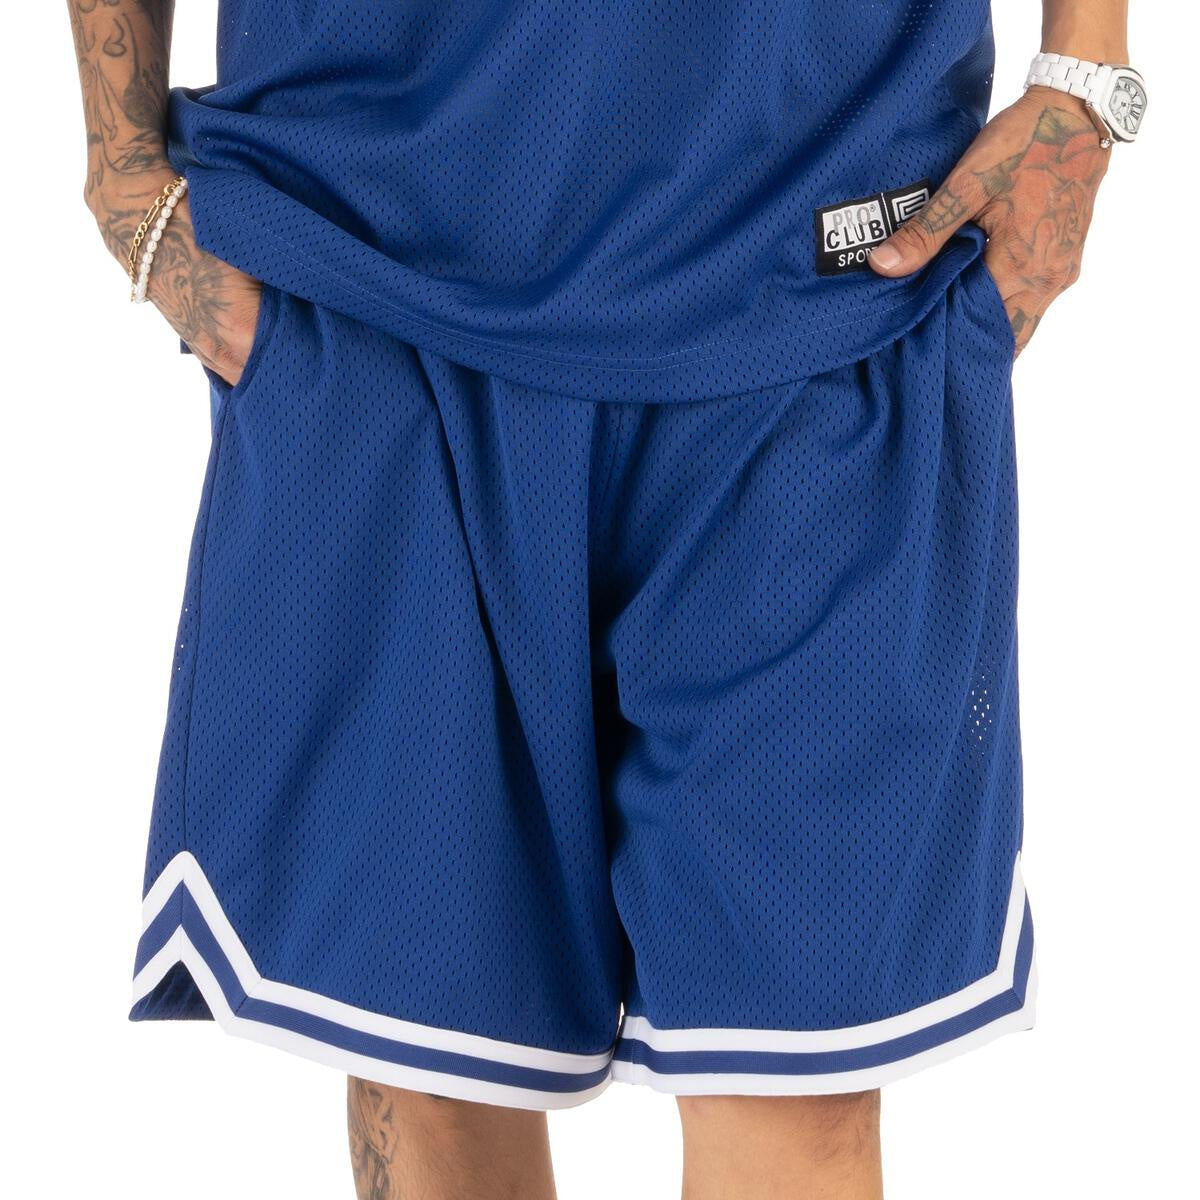 Pro Club Basketball Shorts